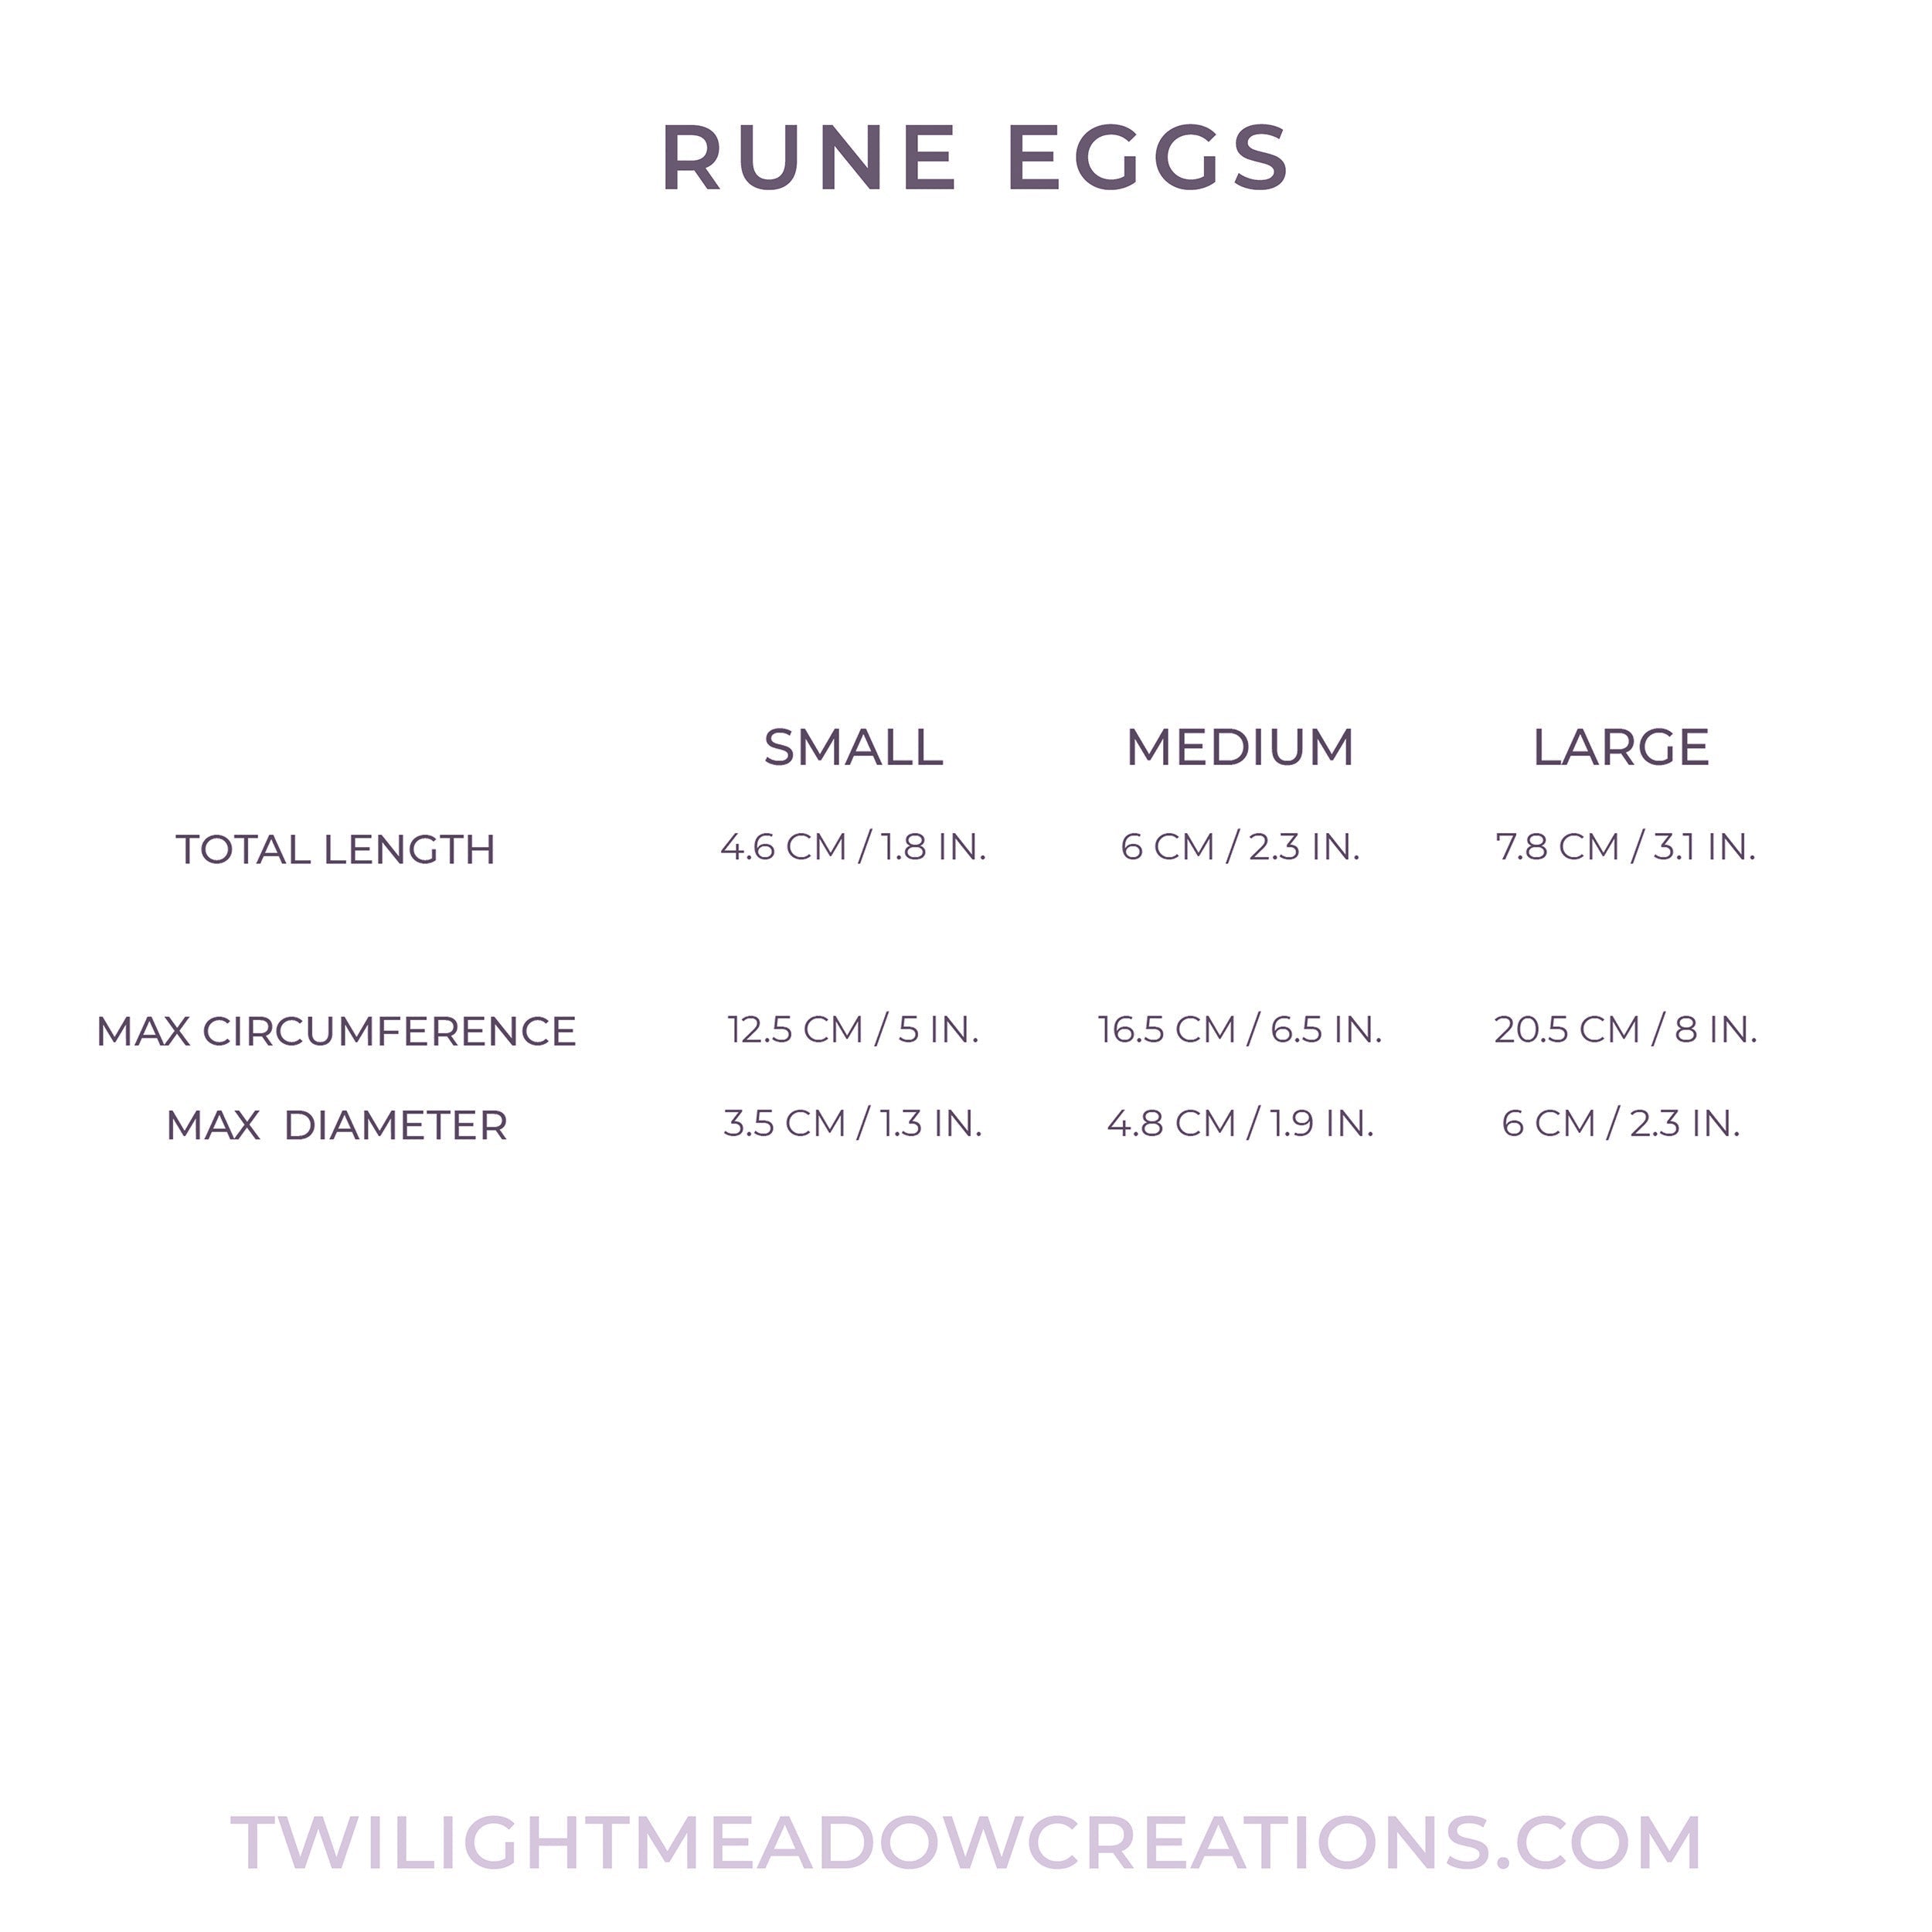 Rune Egg Set (Firmness: Soft)